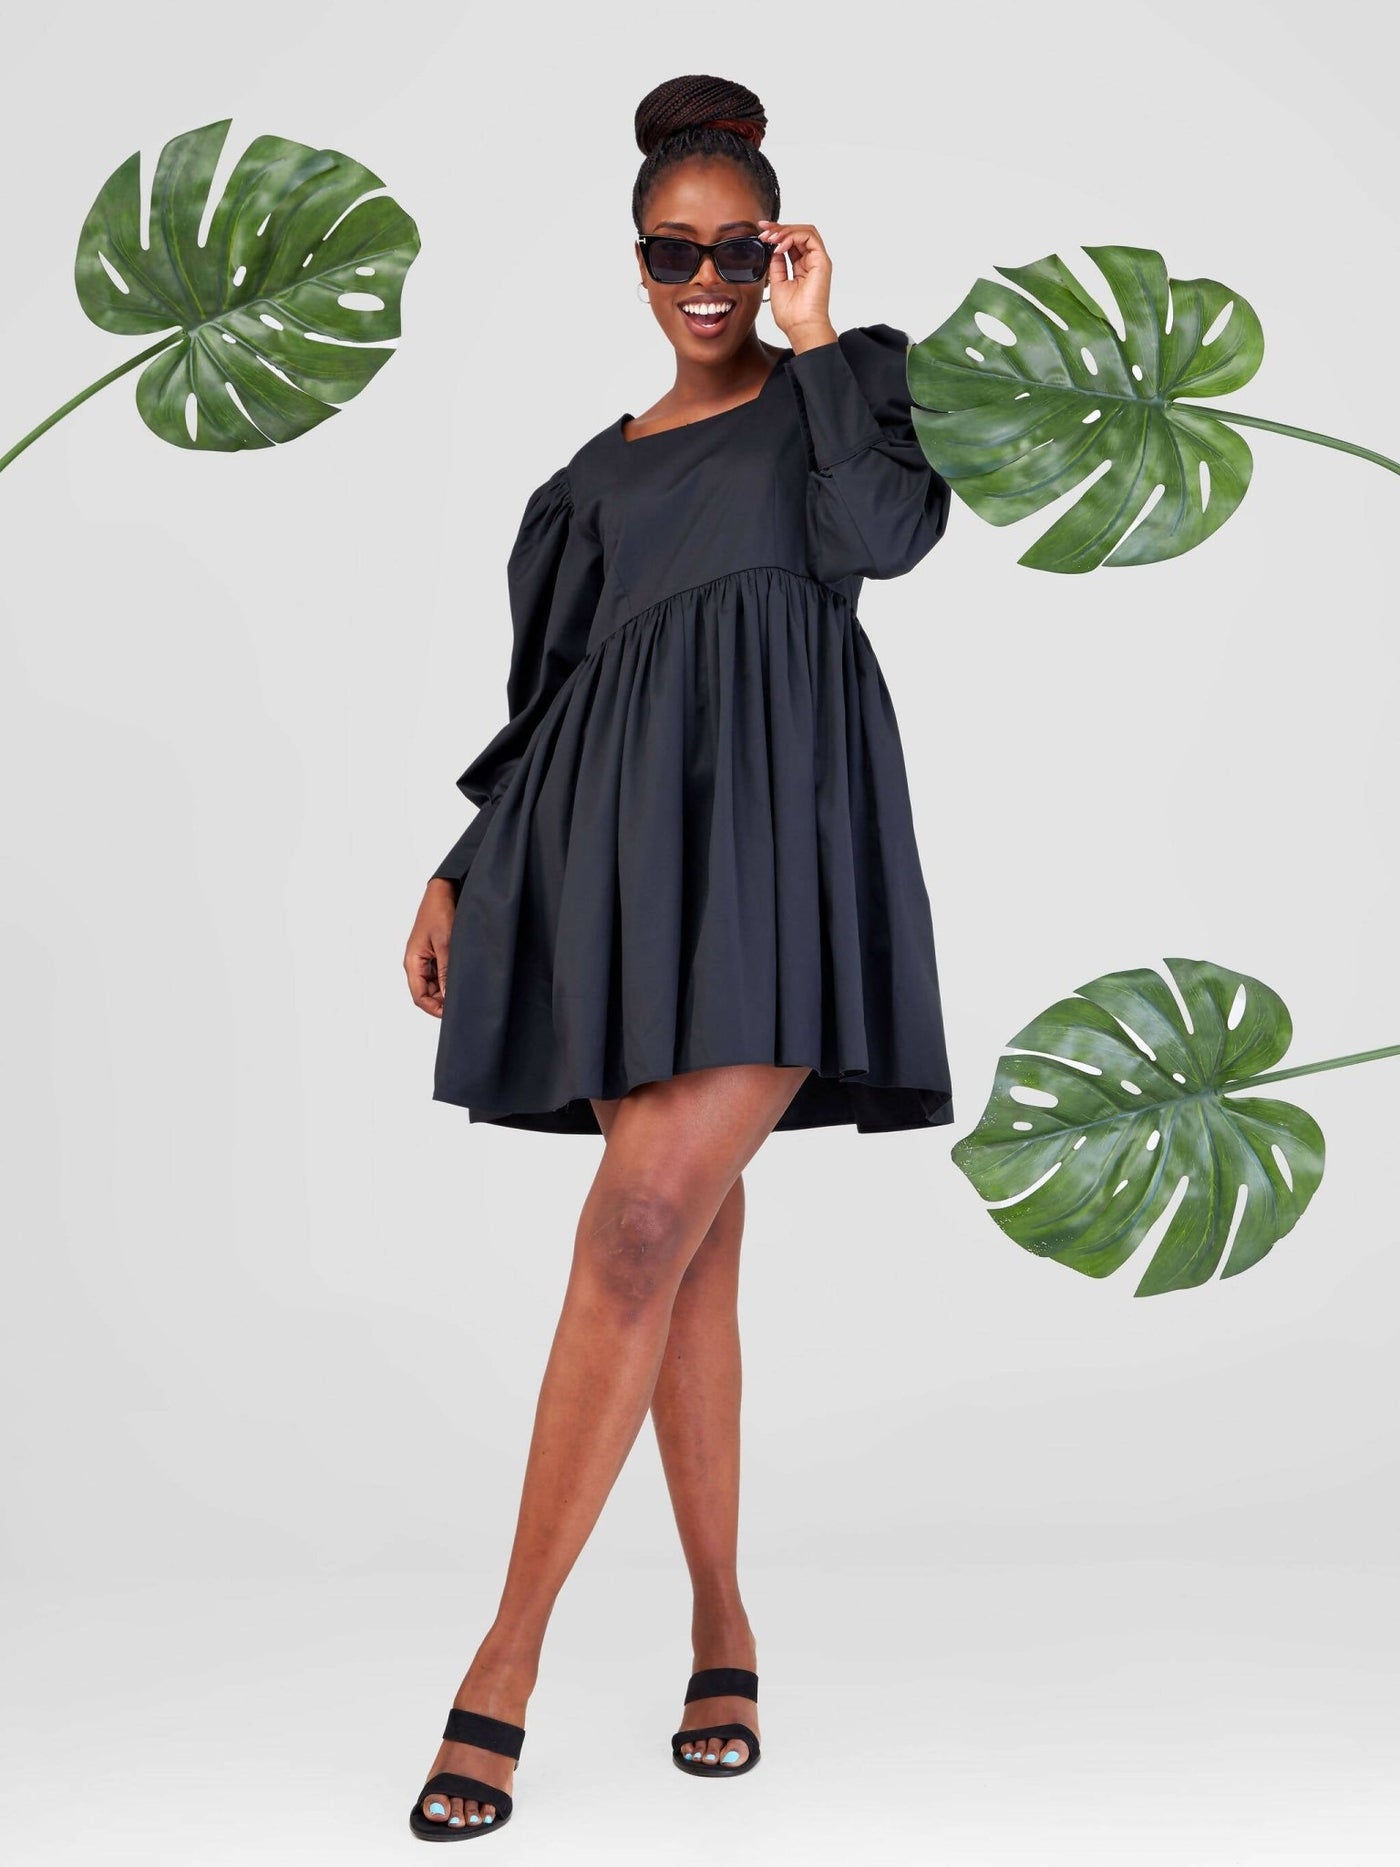 Izulu Doldol Mini Dress - Black - Shopzetu